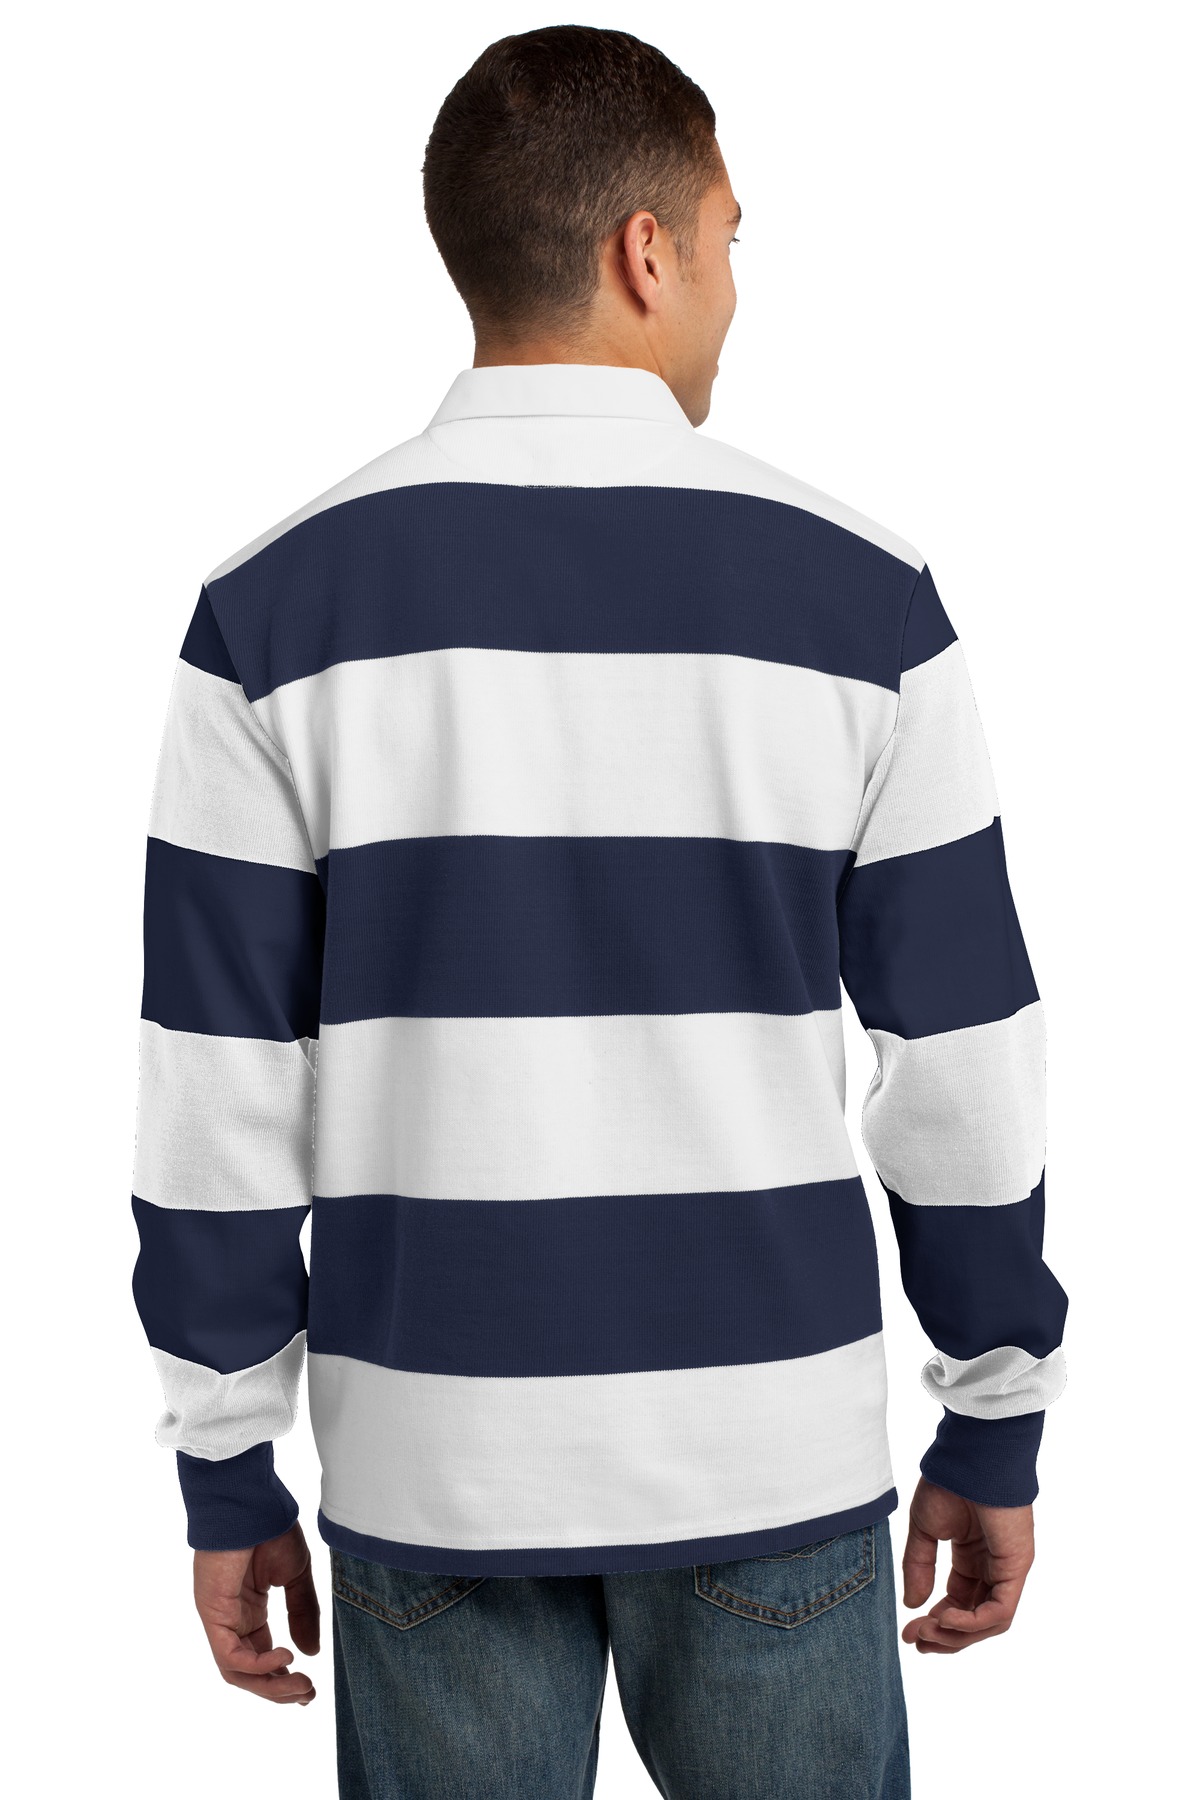 Sport Tek Adult Male Men Stripe Long Sleeves Rugby Polo True Navy/Wht Large - image 2 of 6